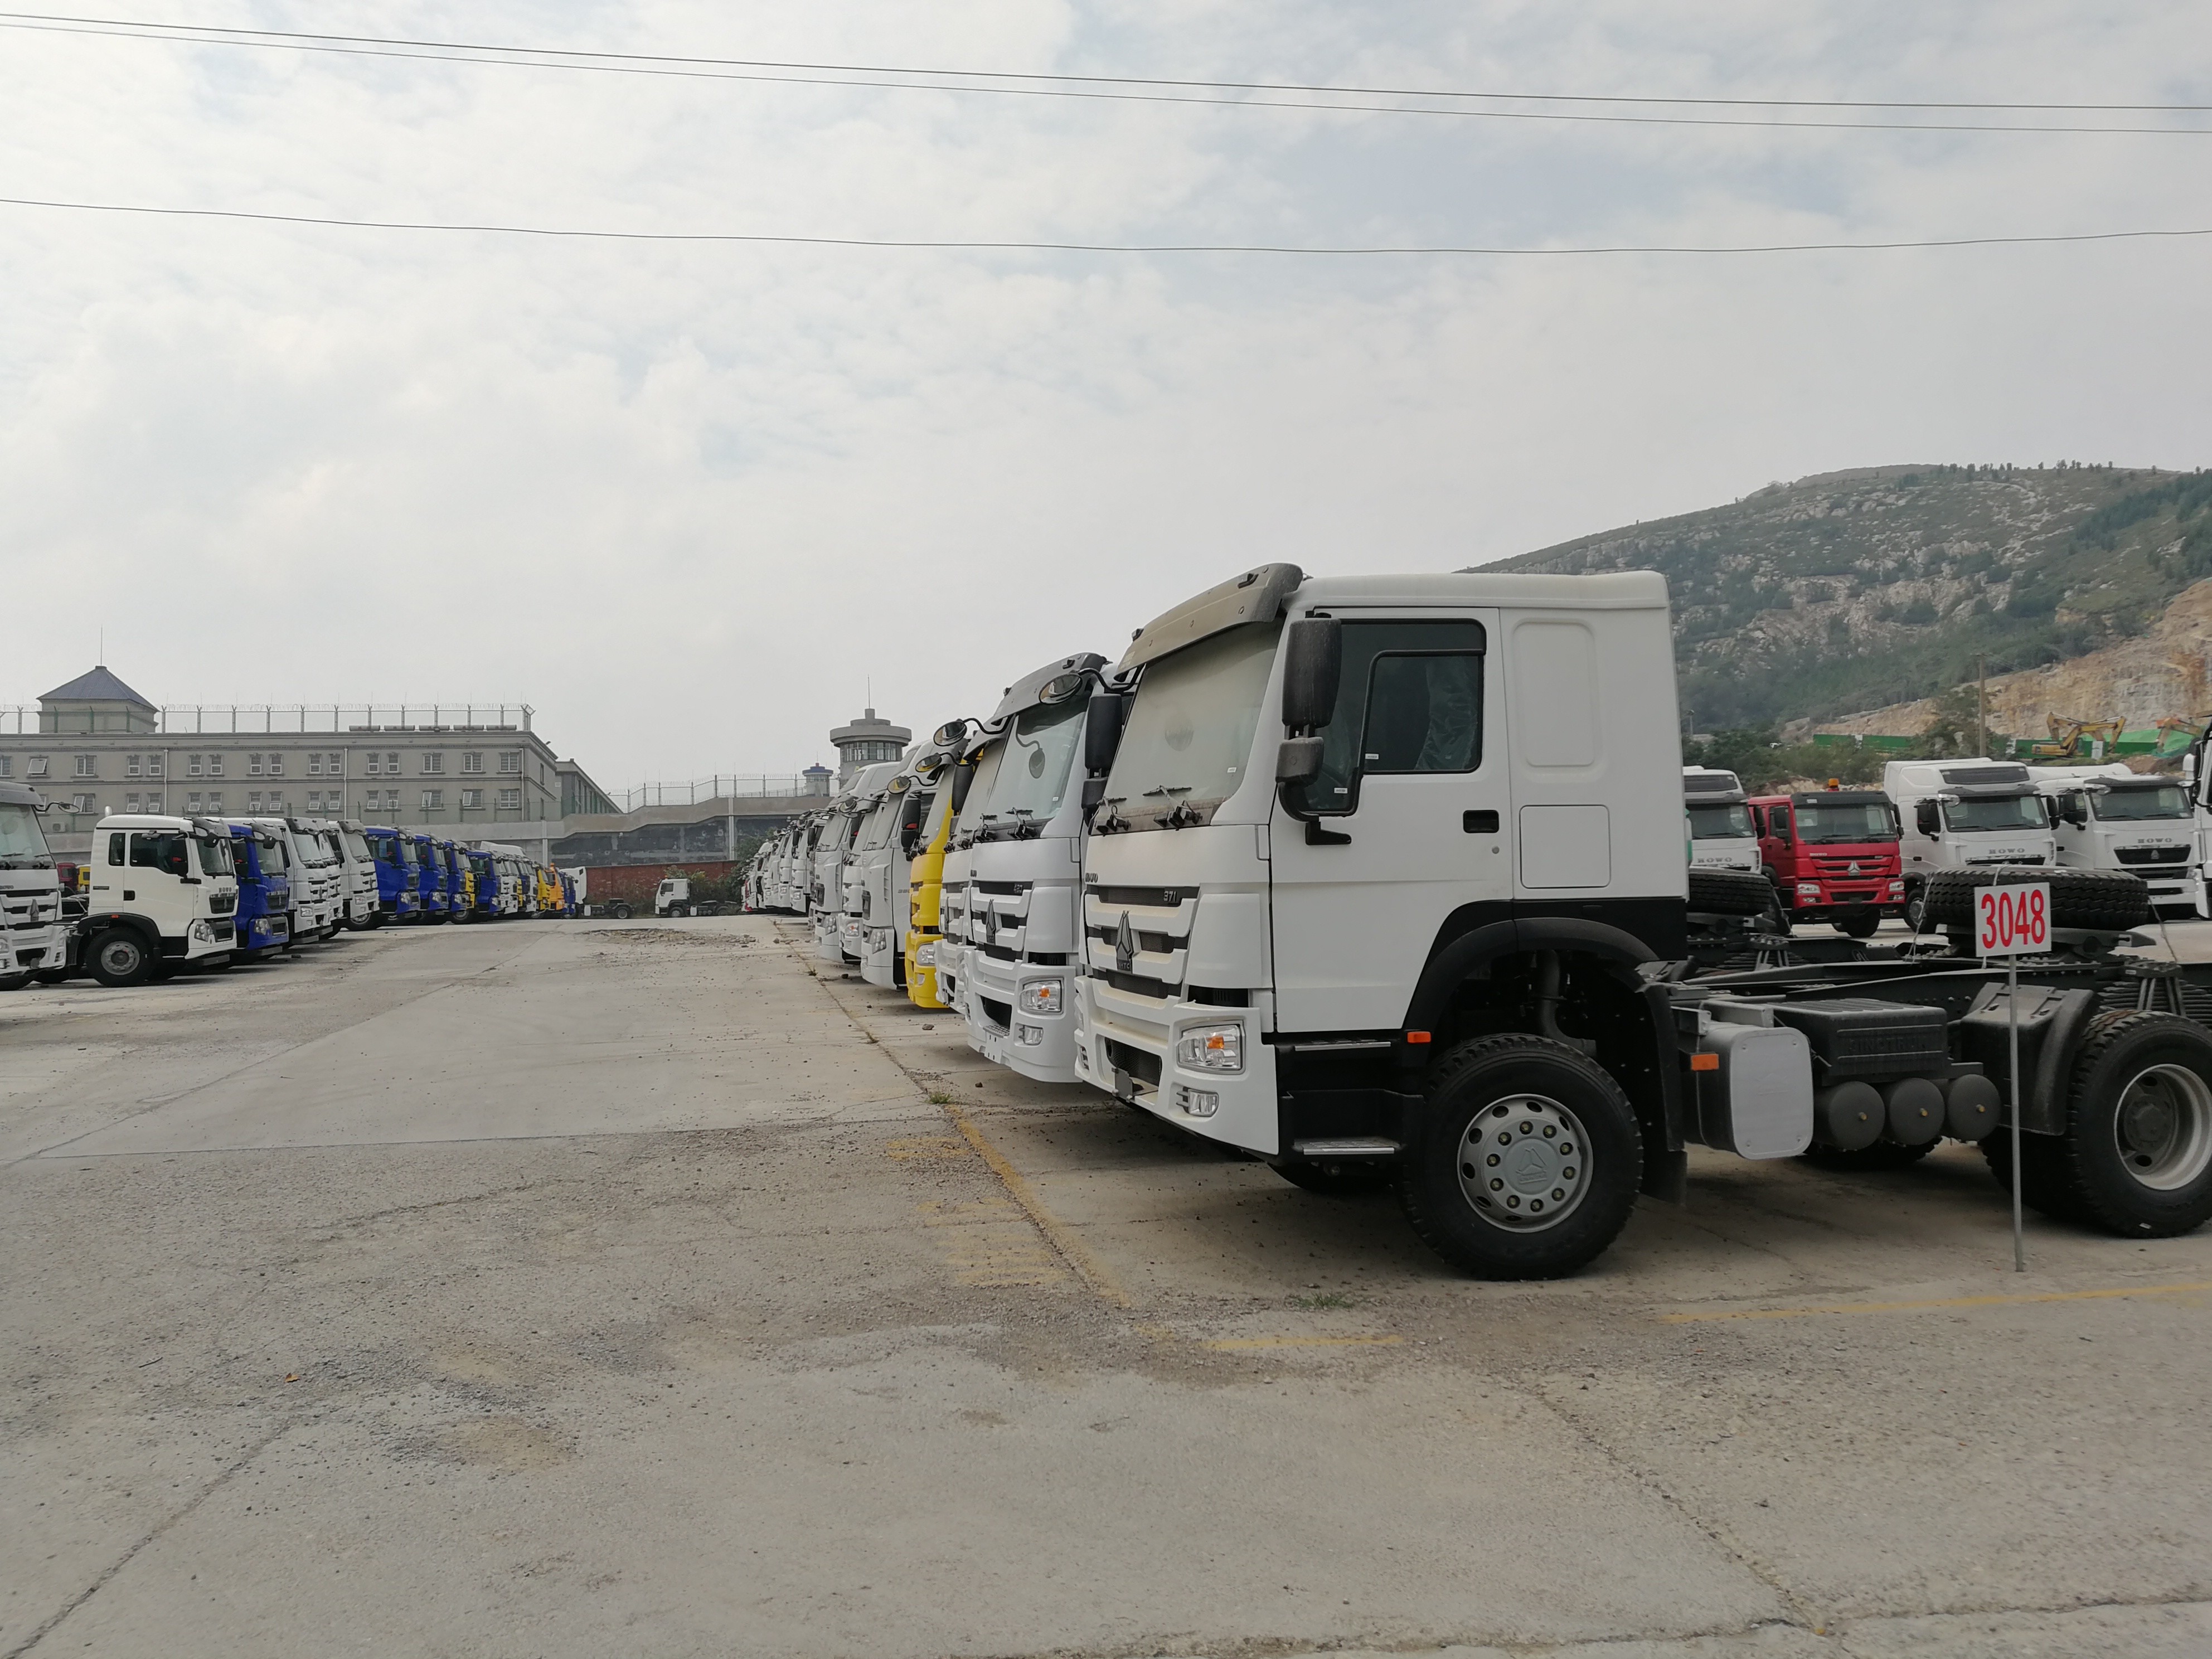 Sinotruk Howo 6x4 φορτηγό ρυμουλκών τρακτέρ 420 HP με τη μηχανή D12.40 και την καμπίνα HW76